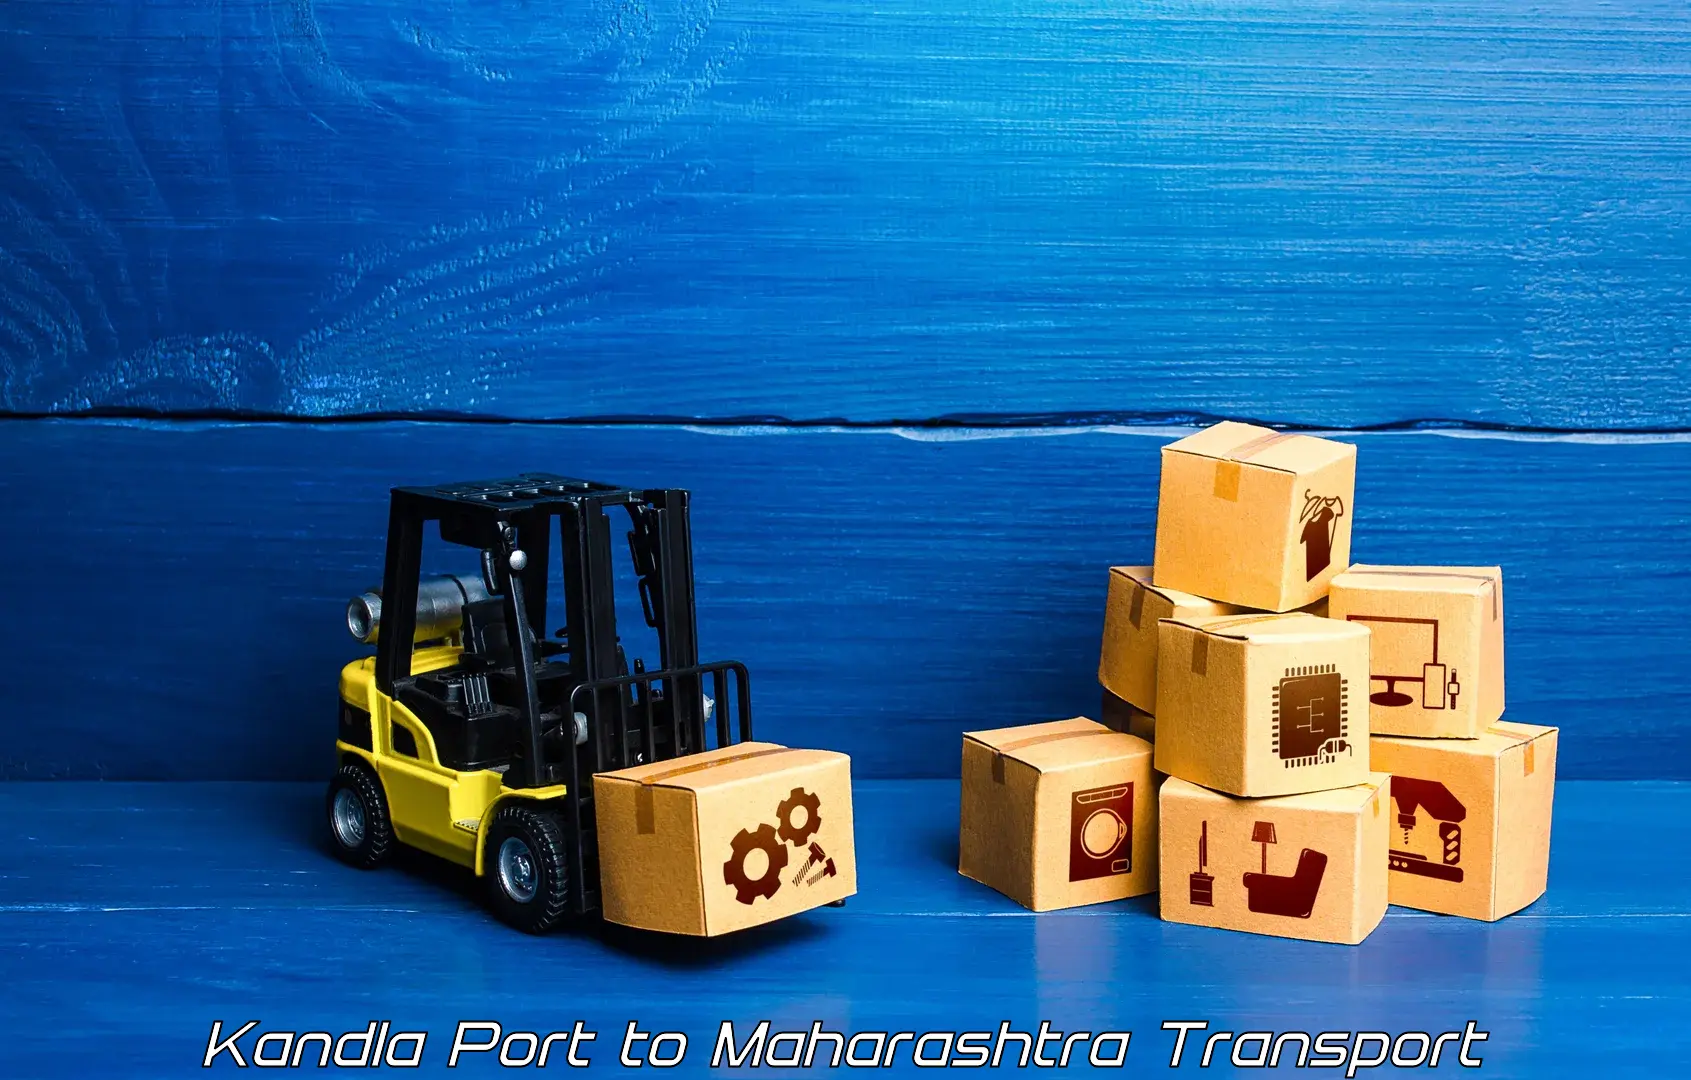 Container transport service Kandla Port to Maharashtra